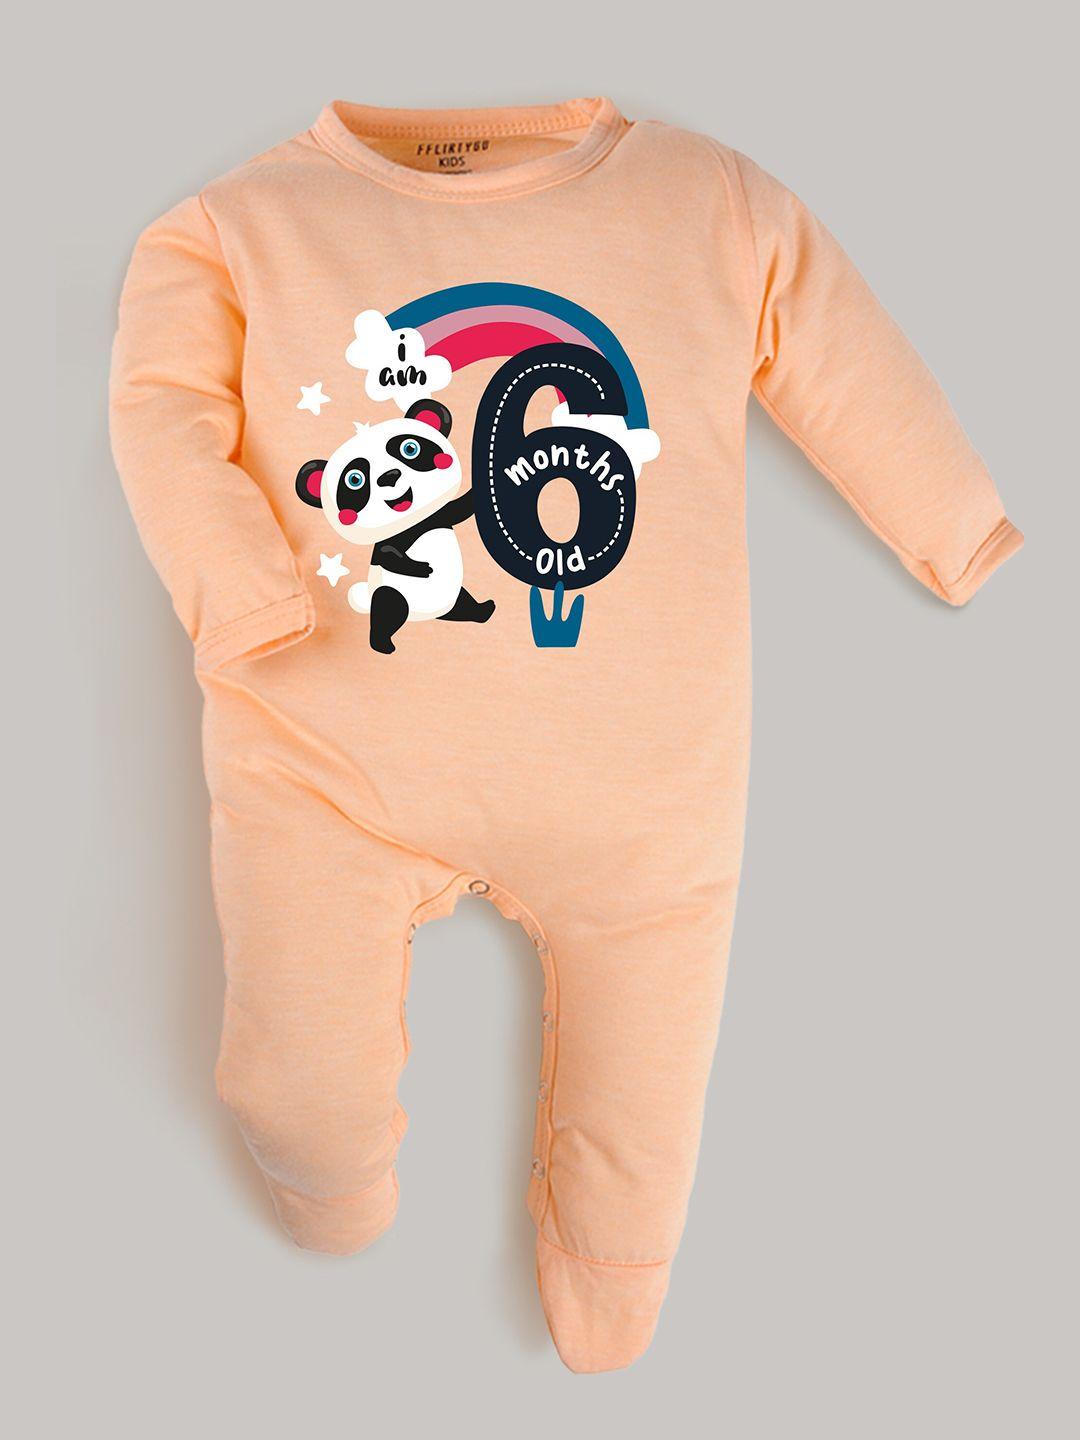 fflirtygo infant kids peach-colored & black printed sleepsuit